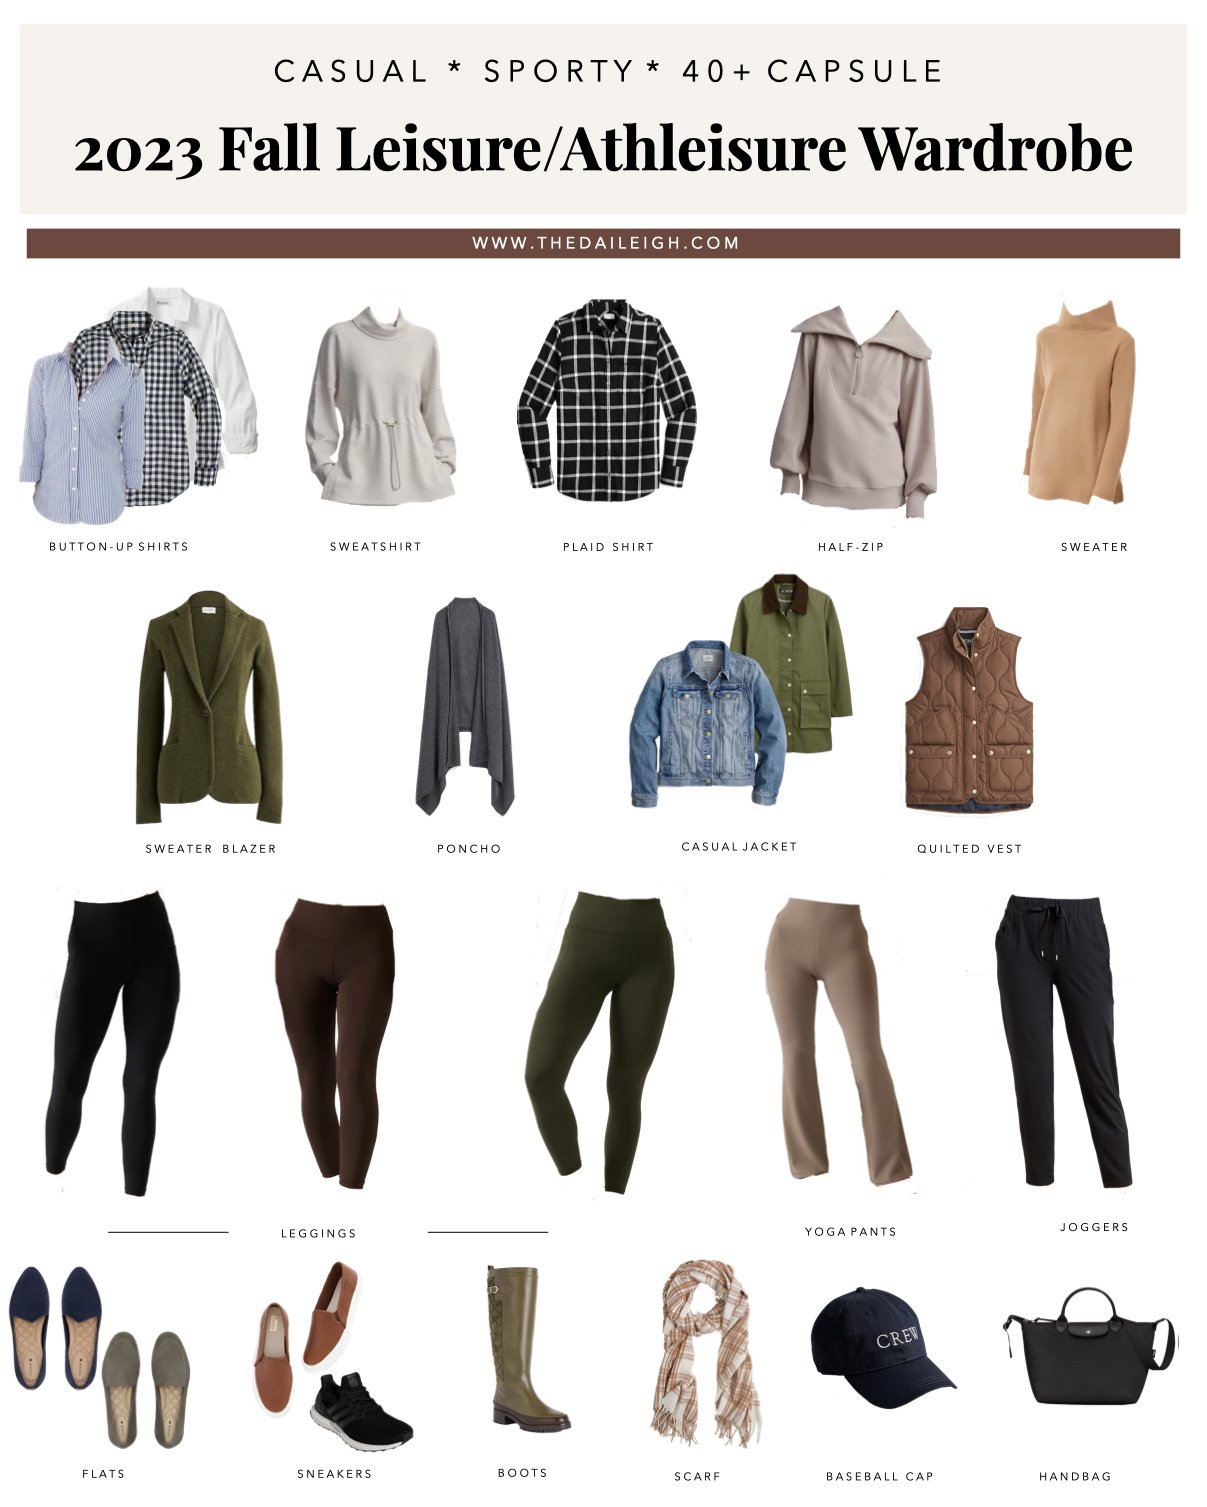 2023 Fall Leisure Capsule Wardrobe — THE DAILEIGH